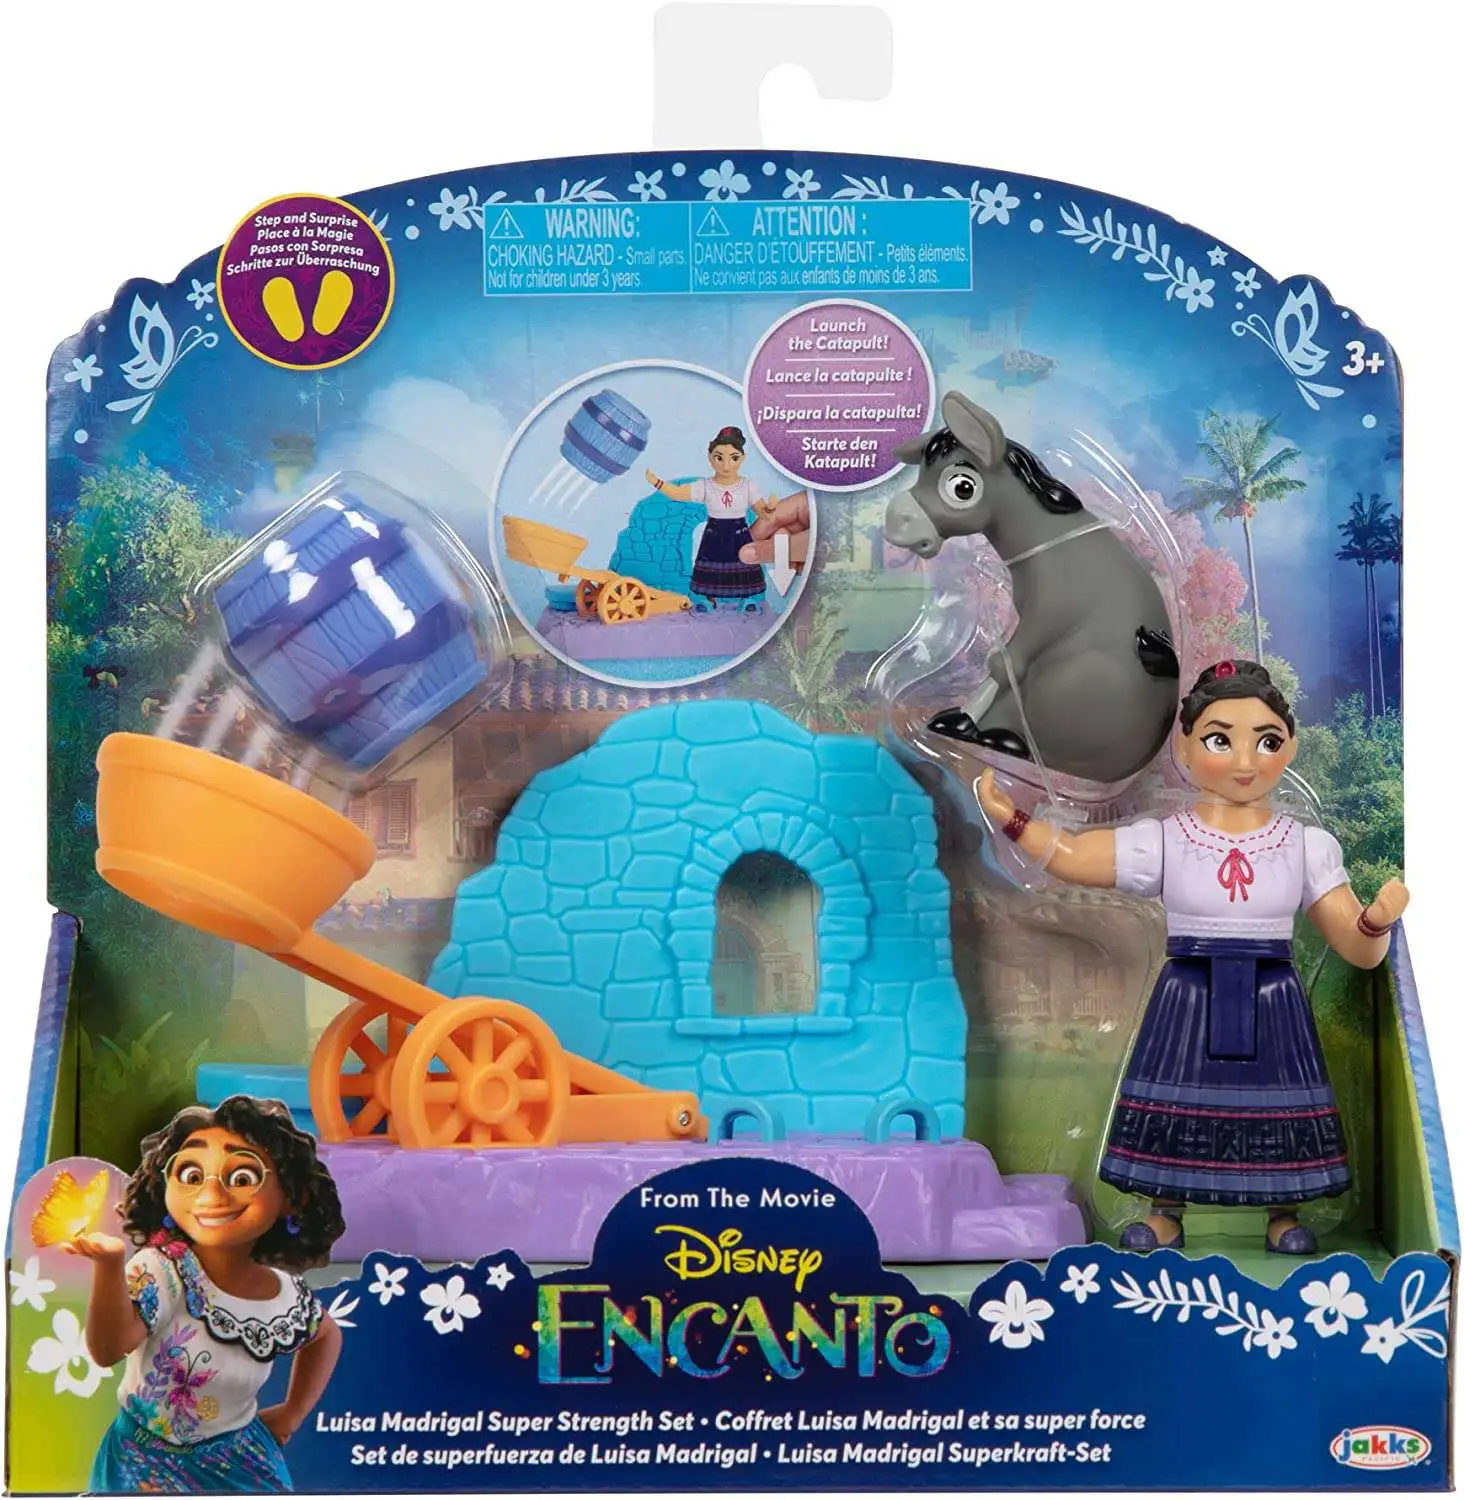 Disney Encanto Mi Familia Exclusive 12-Piece PVC Figurine Set JAKKS PACIFIC